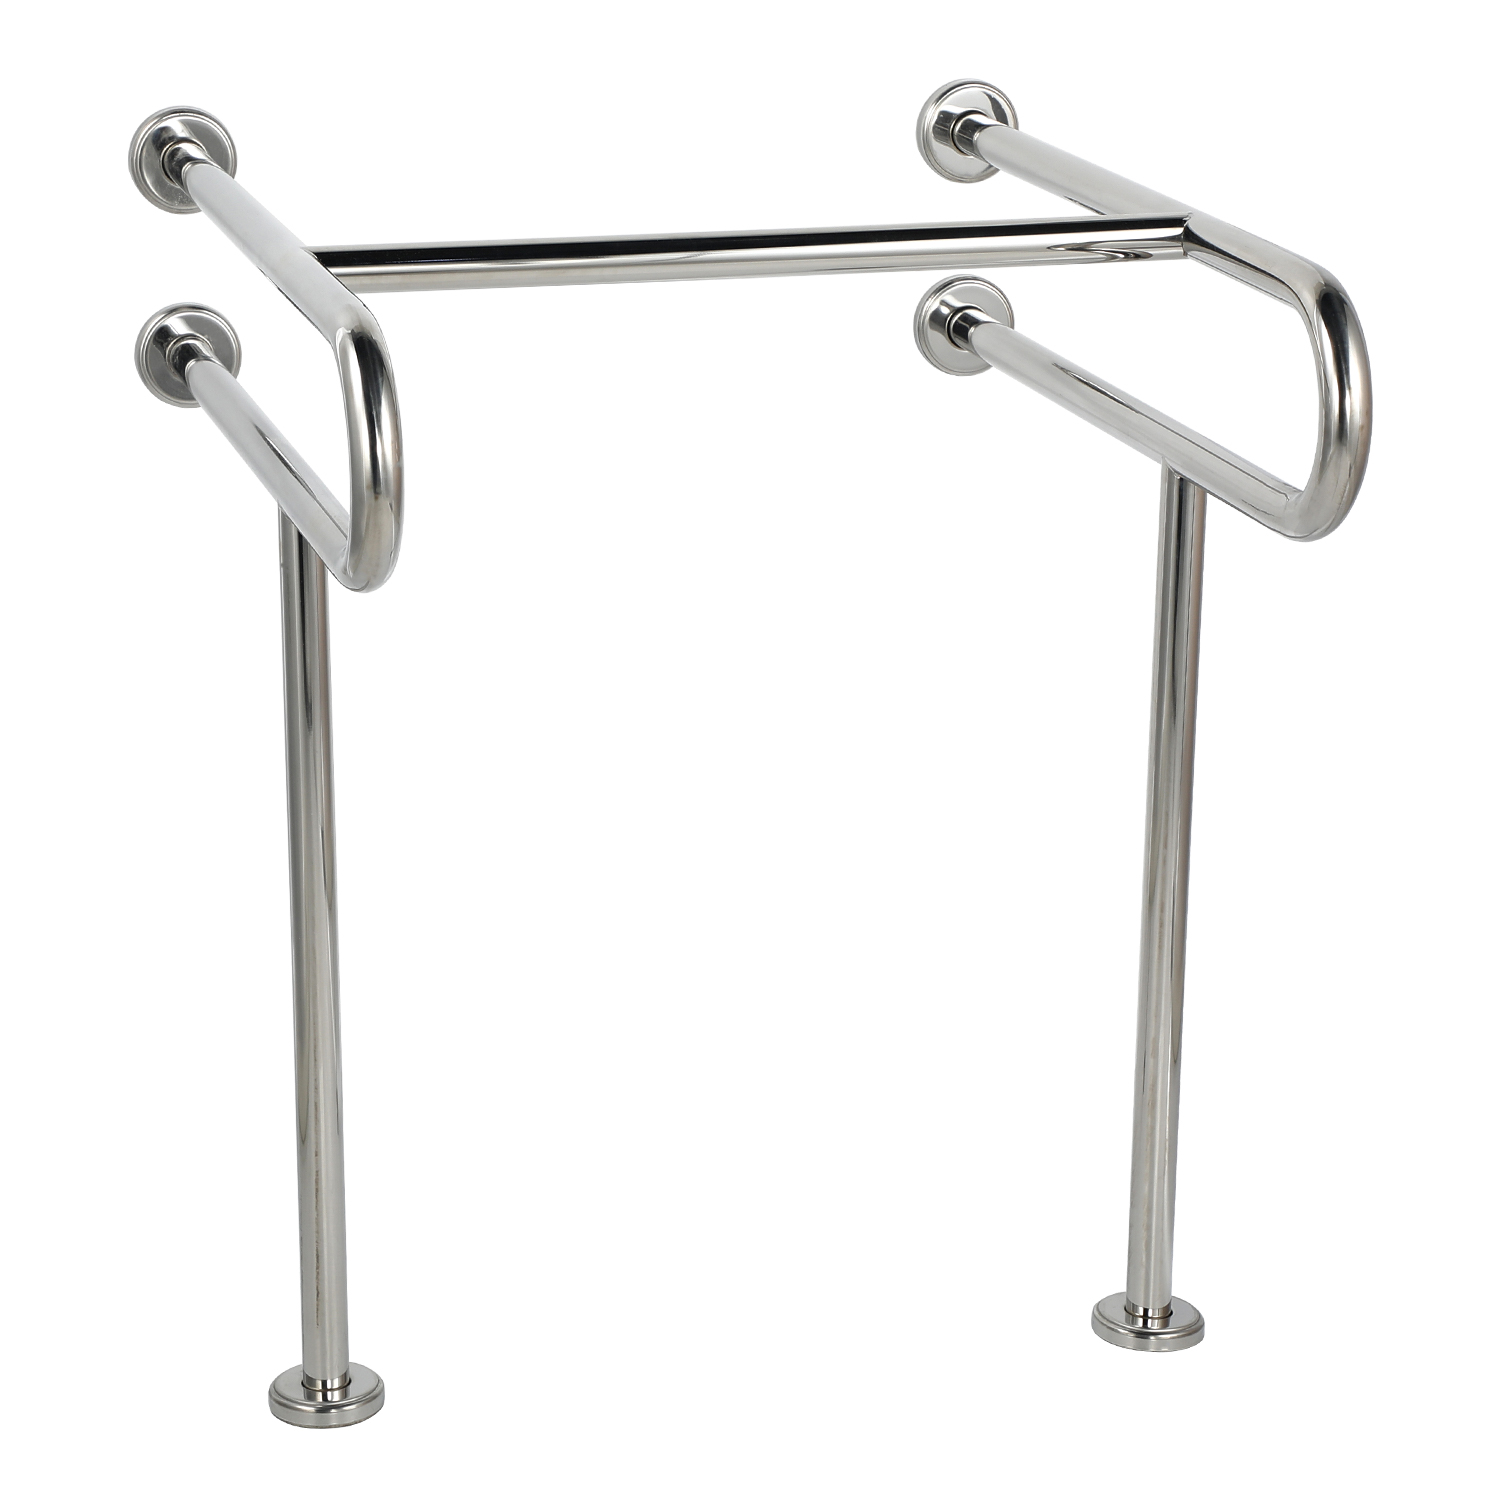 Stainless Steel Handicap Toilet Grab Bars